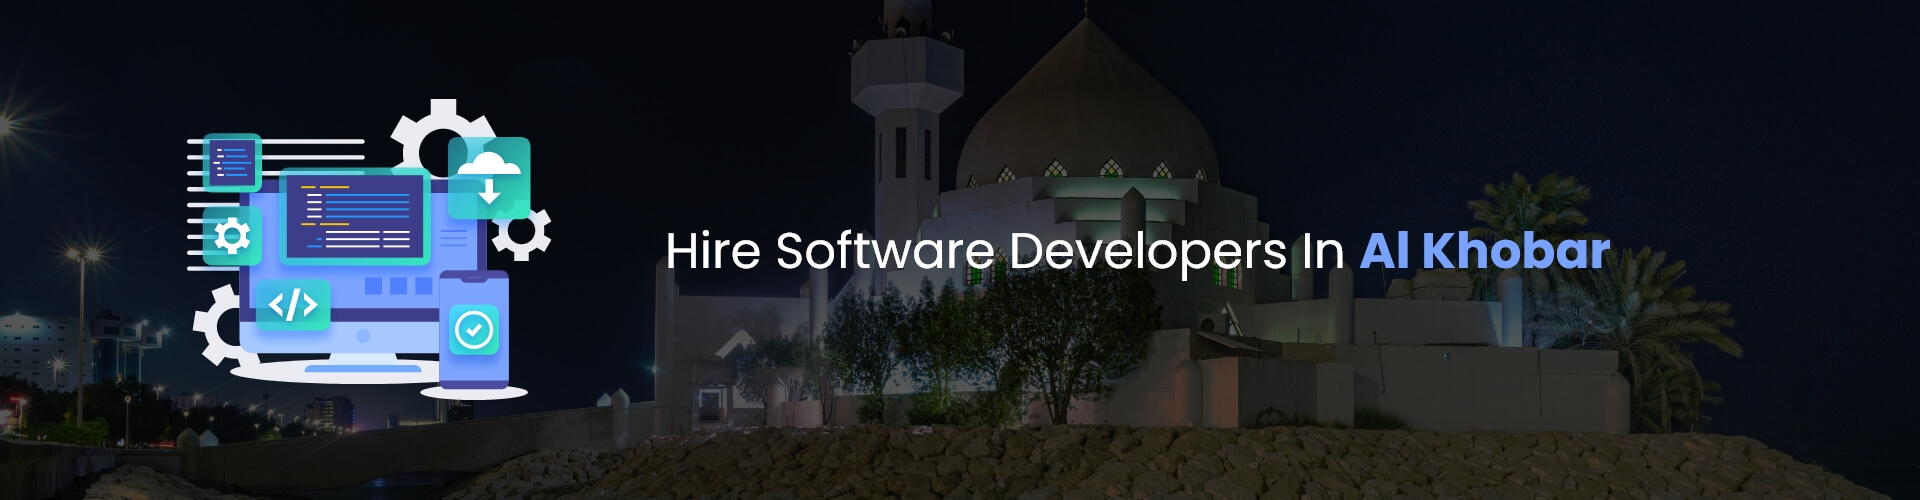 software developers in al khobar